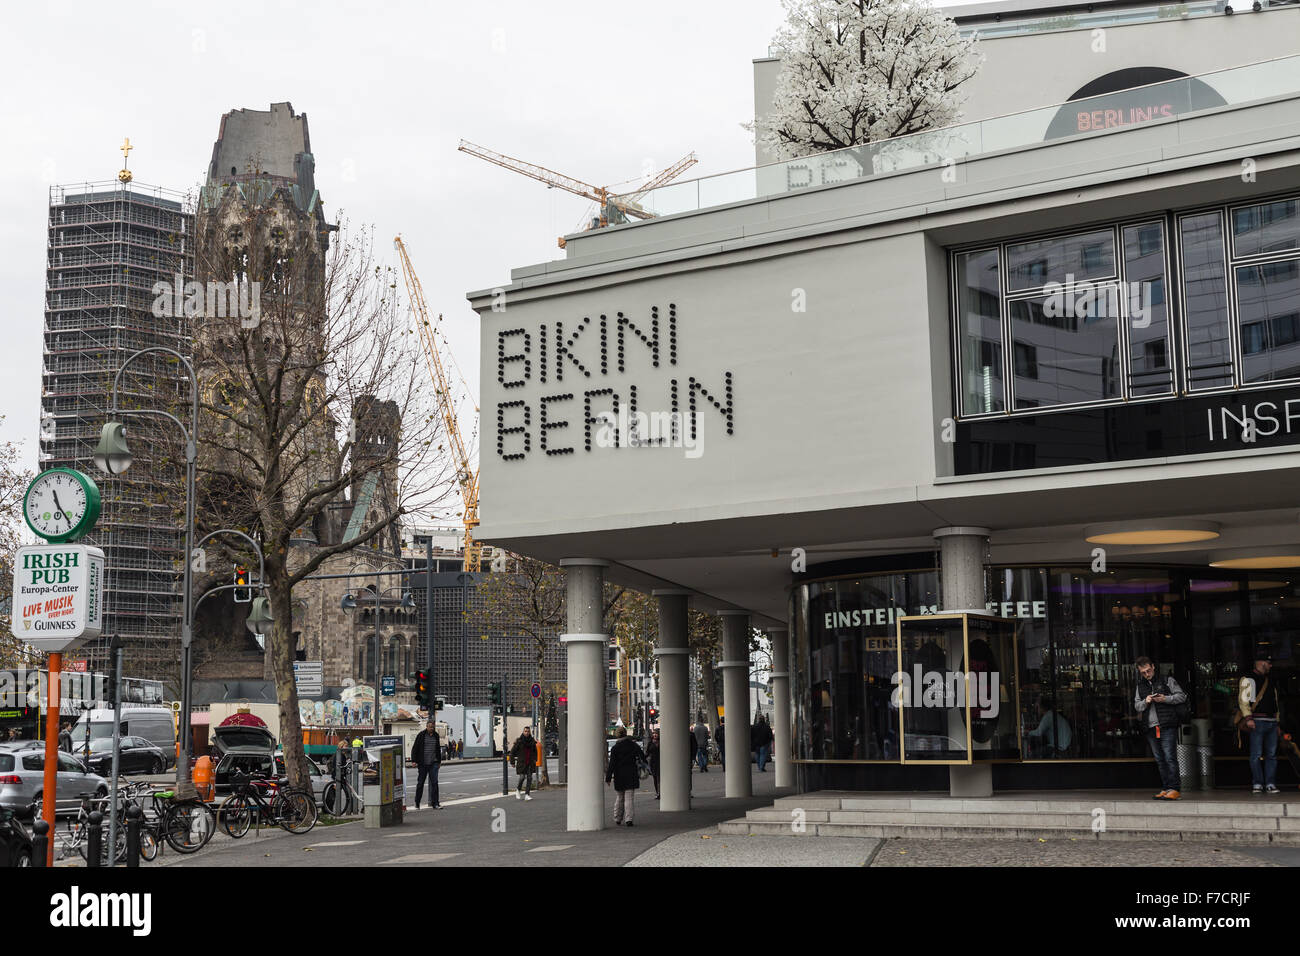 Bikini berlin hi-res stock photography and images - Alamy